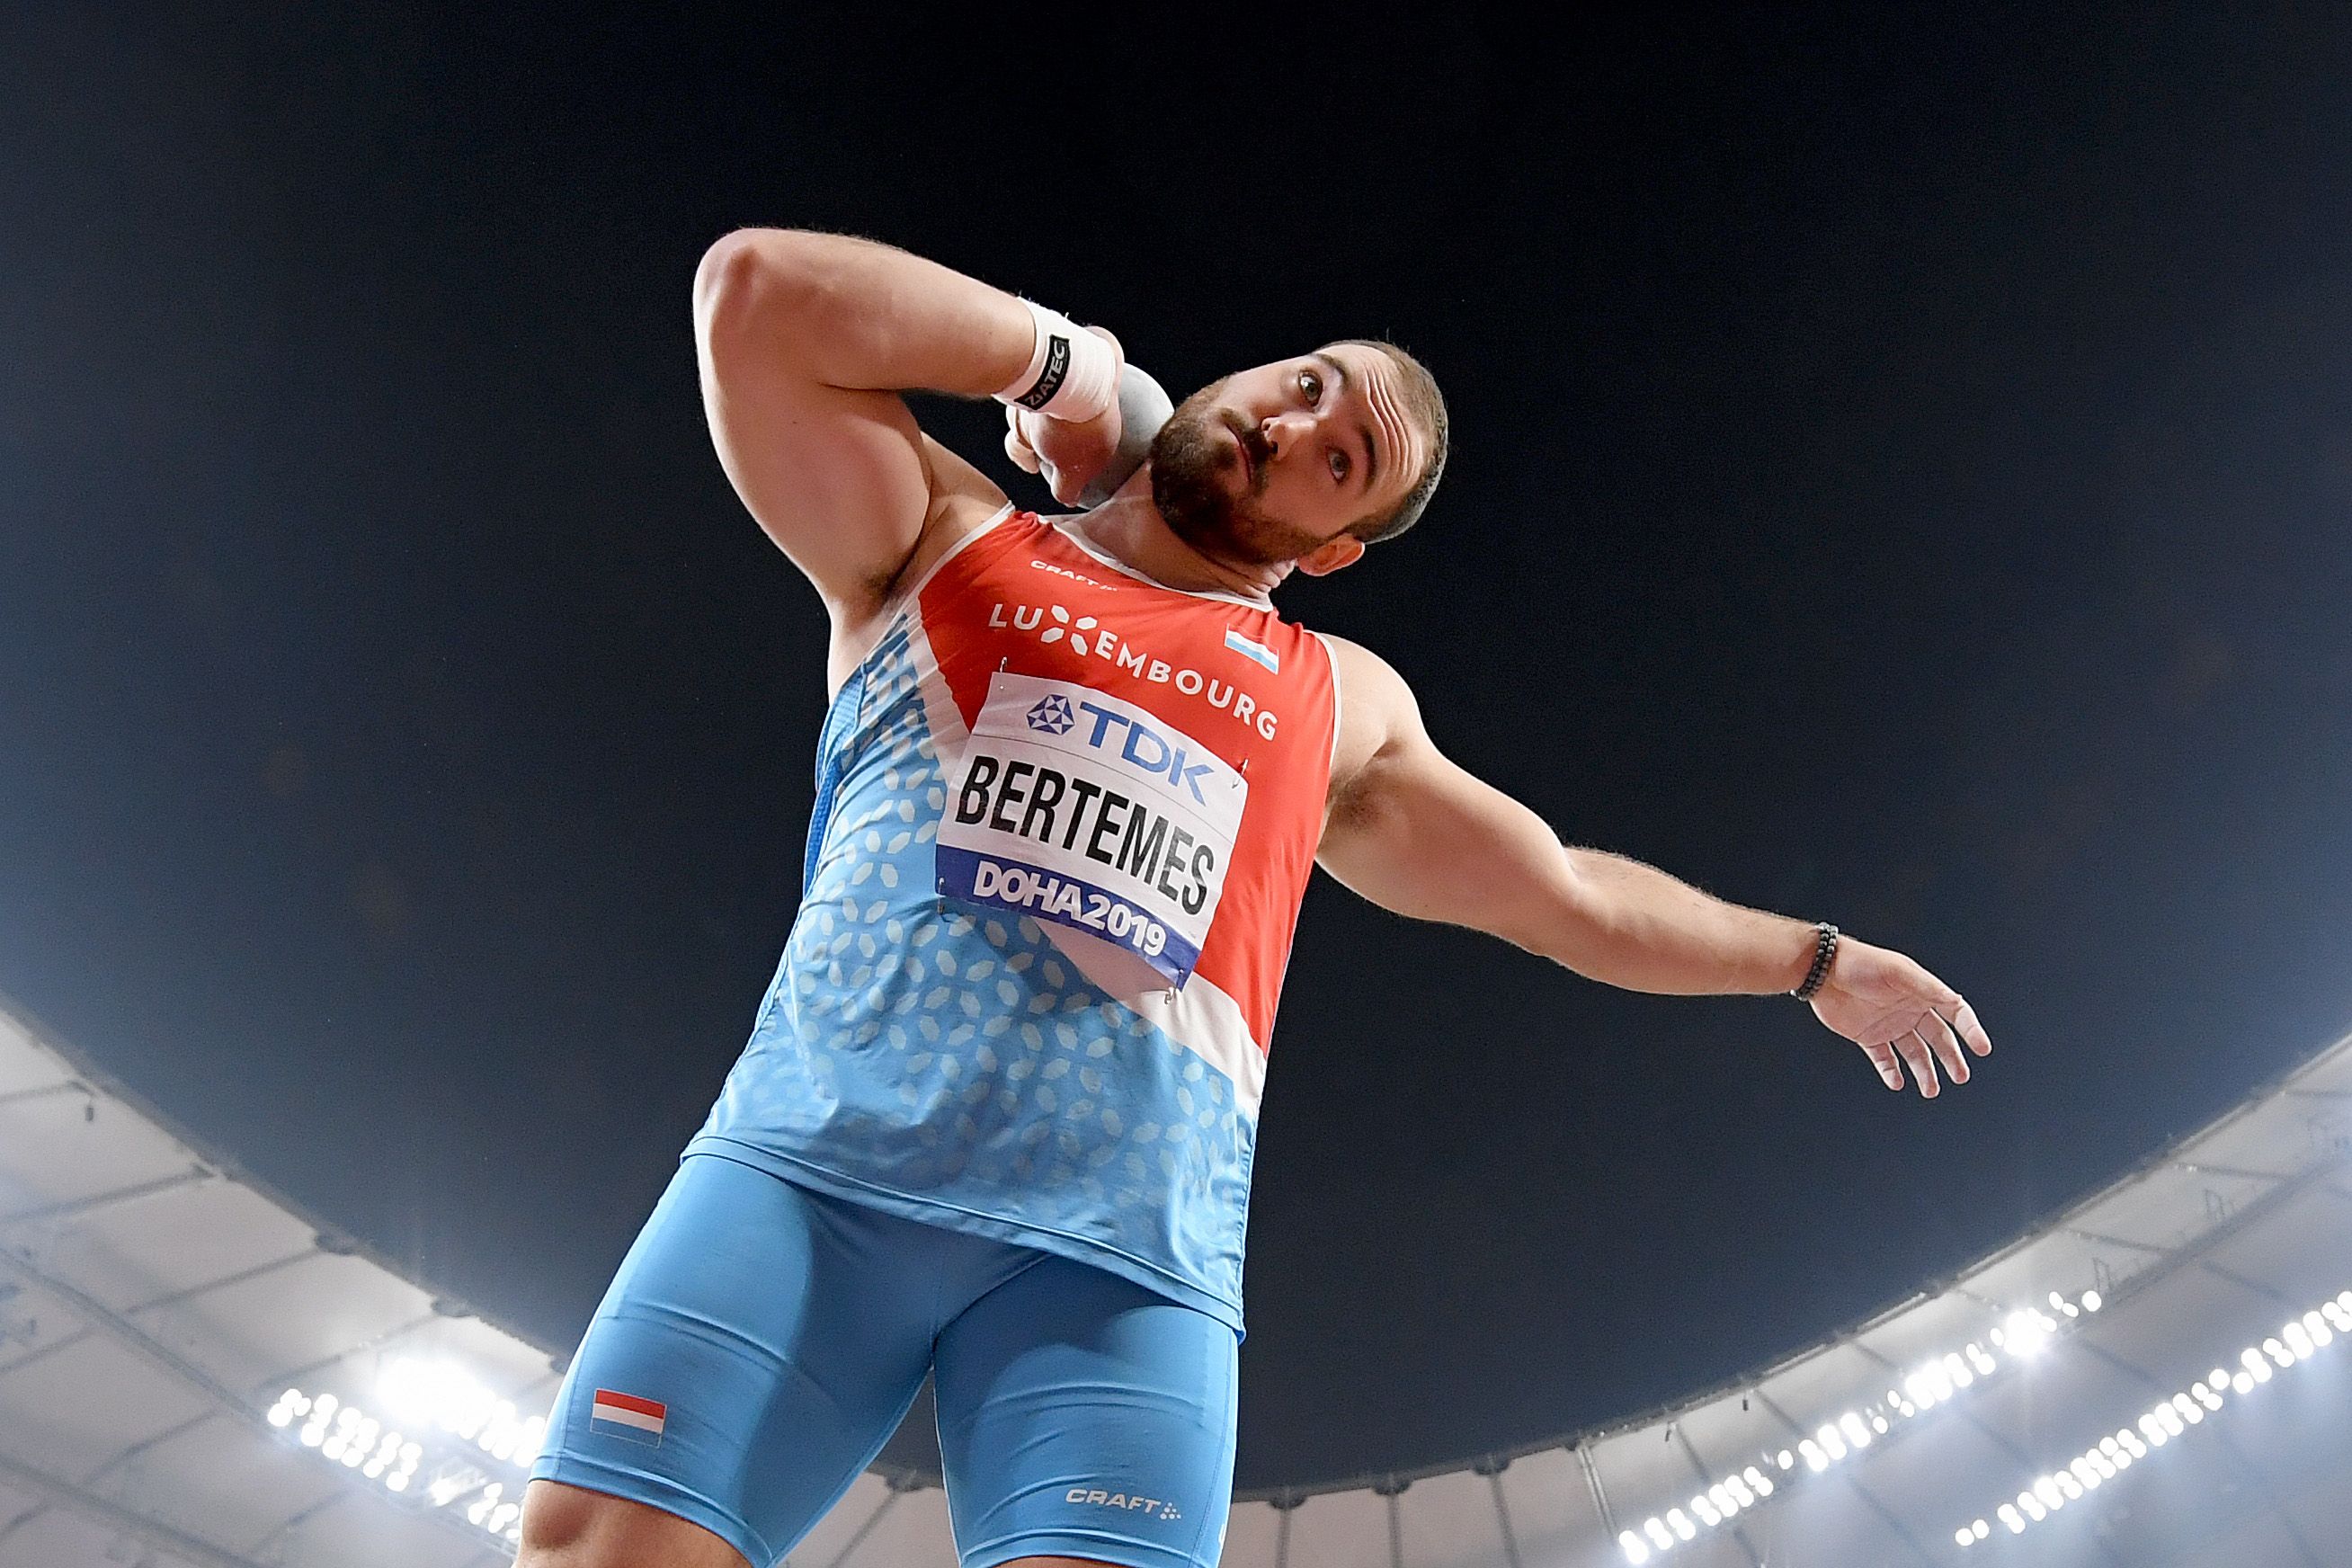 Shot putter Bob Bertemes competes at the 2019 World Athletics Championships in Doha